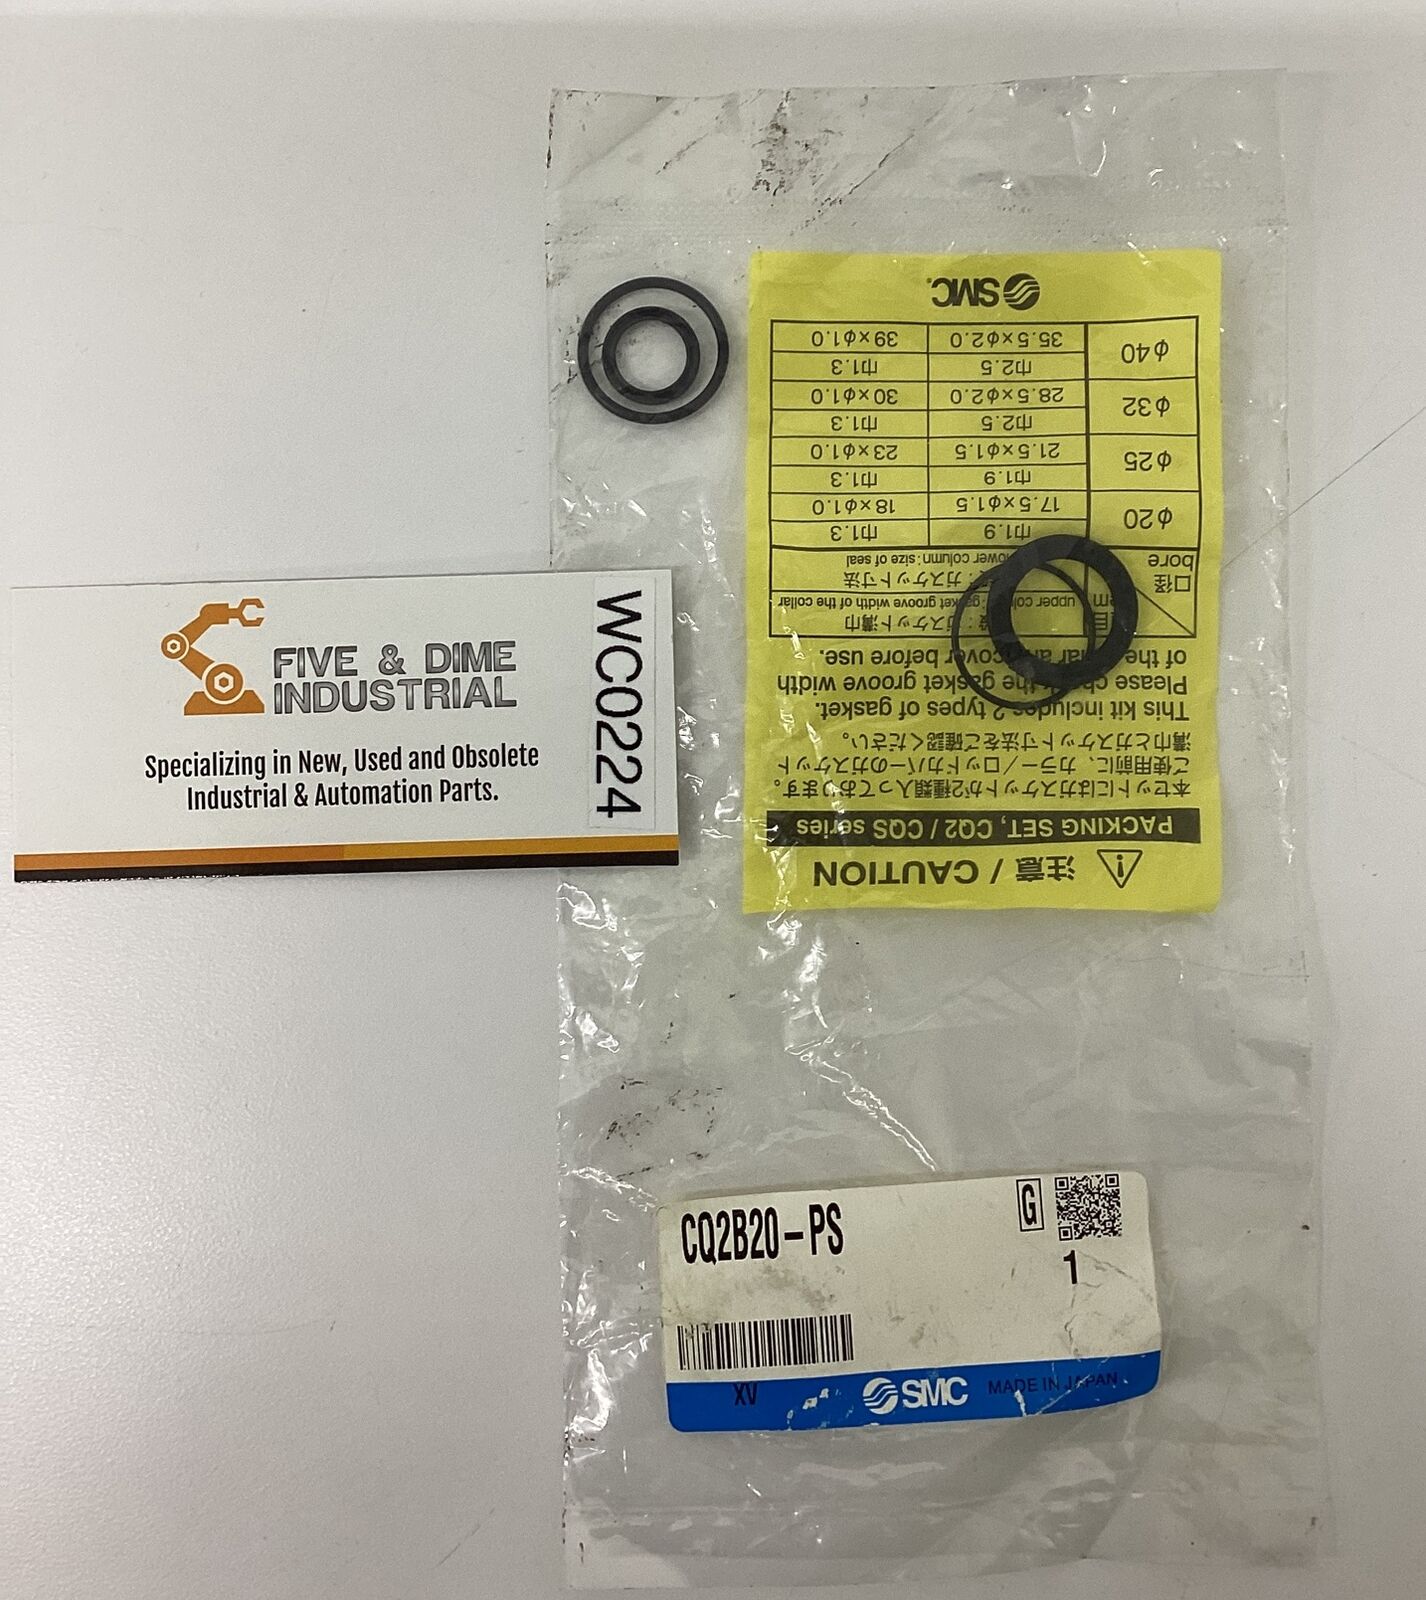 SMC CQ2B20-PS Compact Cylinder O-Ring Kit (BL274)